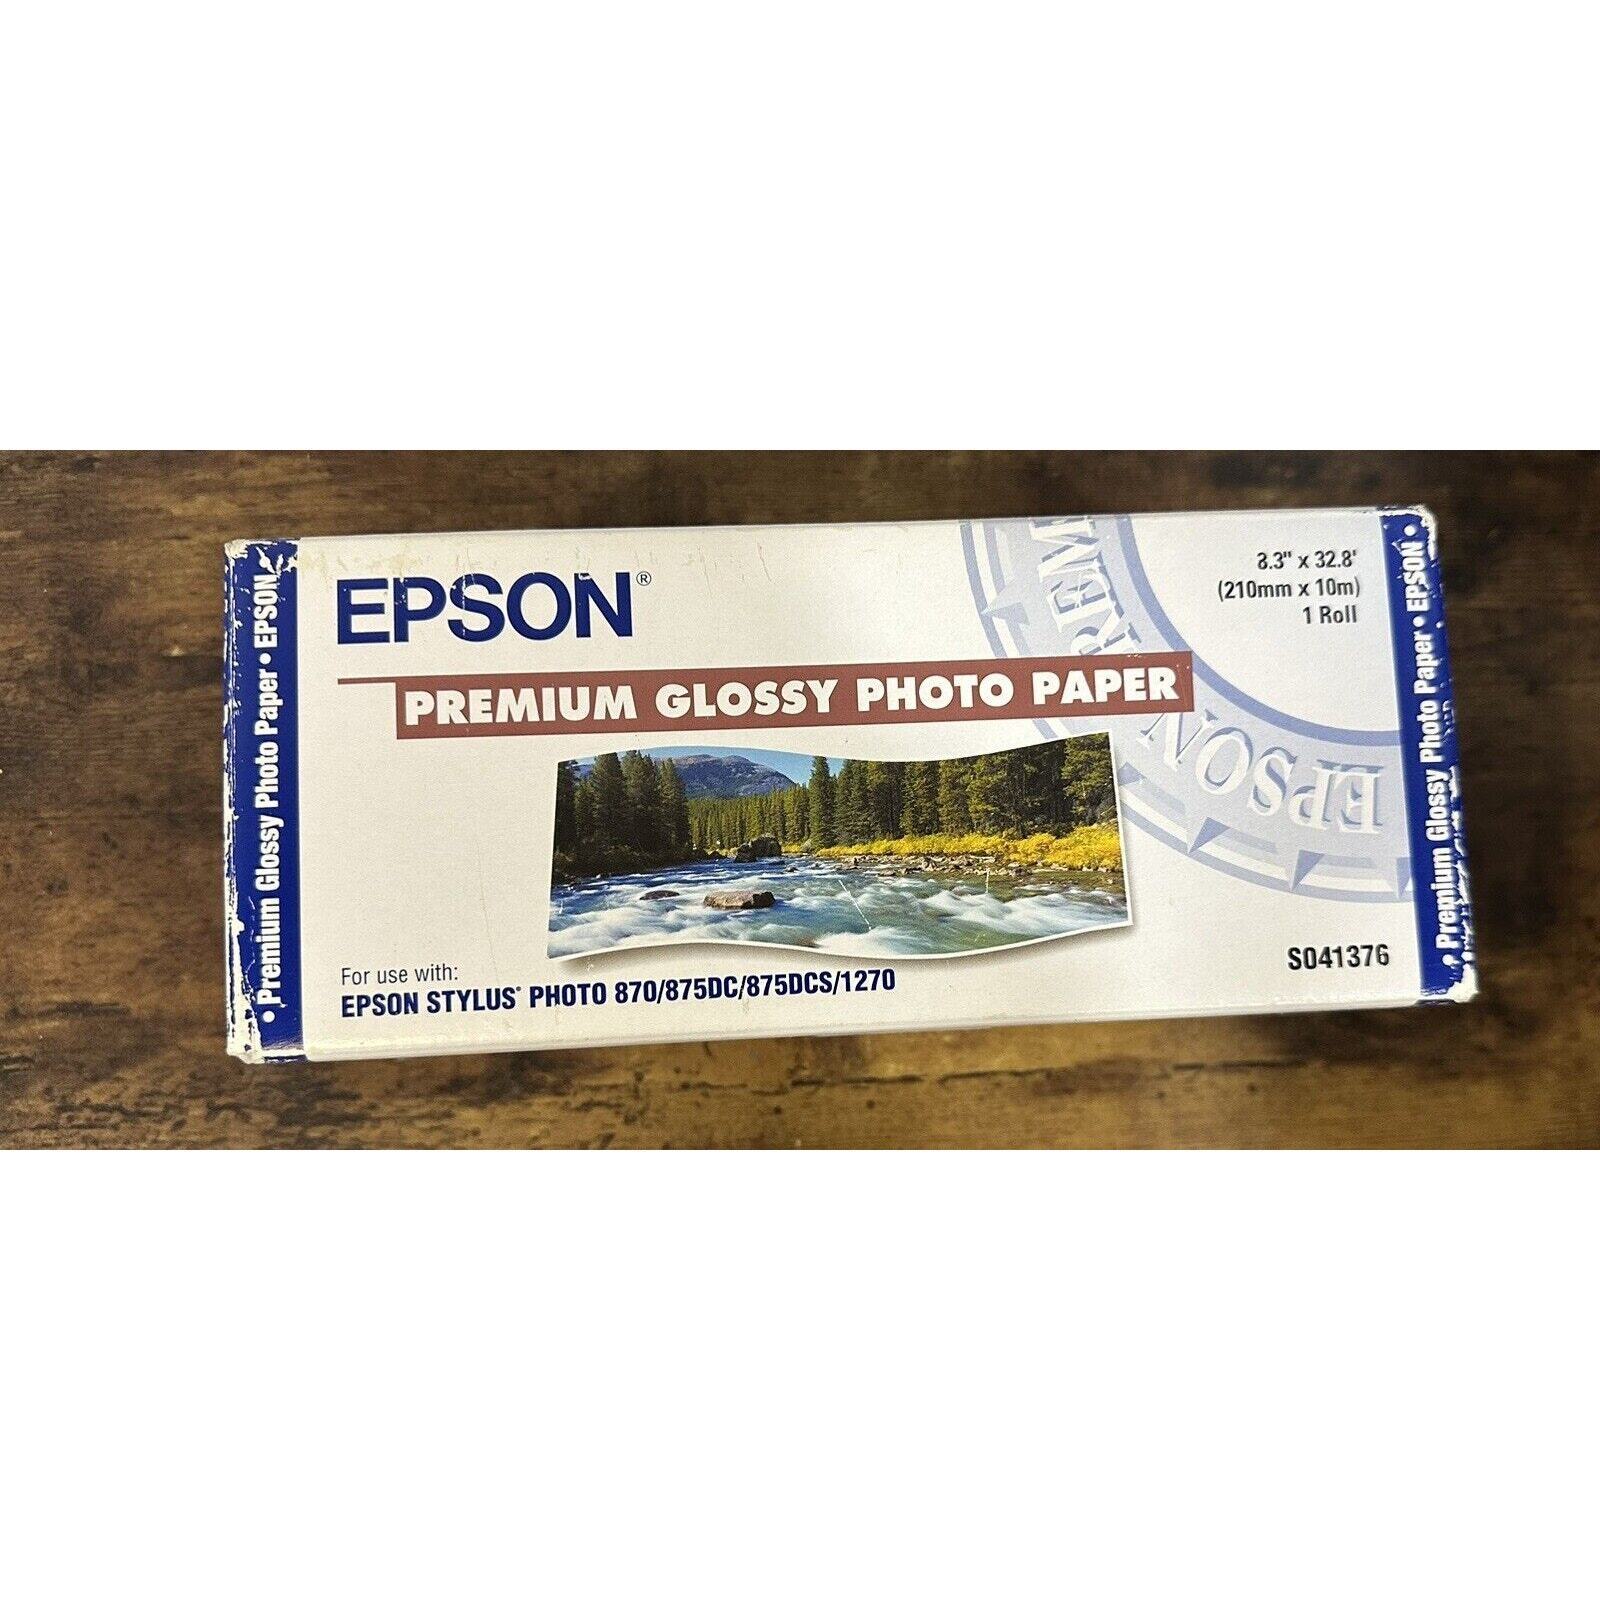 Epson Premium Glossy Photo Paper S041376 Roll 8.3